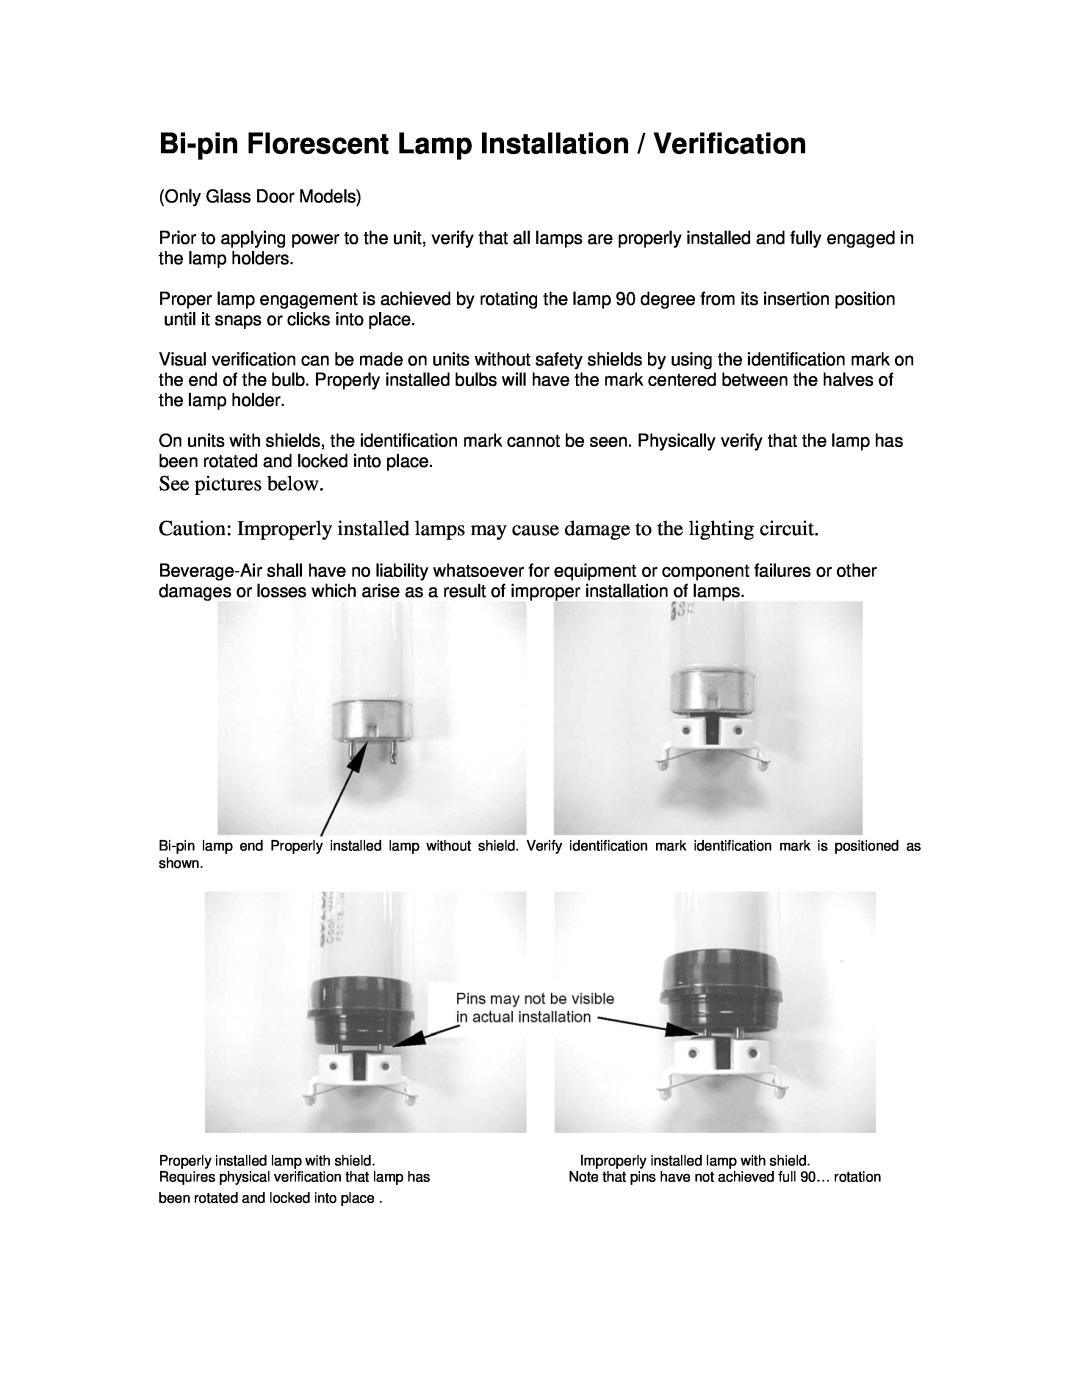 Beverage-Air Refrigerator manual See pictures below, Bi-pinFlorescent Lamp Installation / Verification 